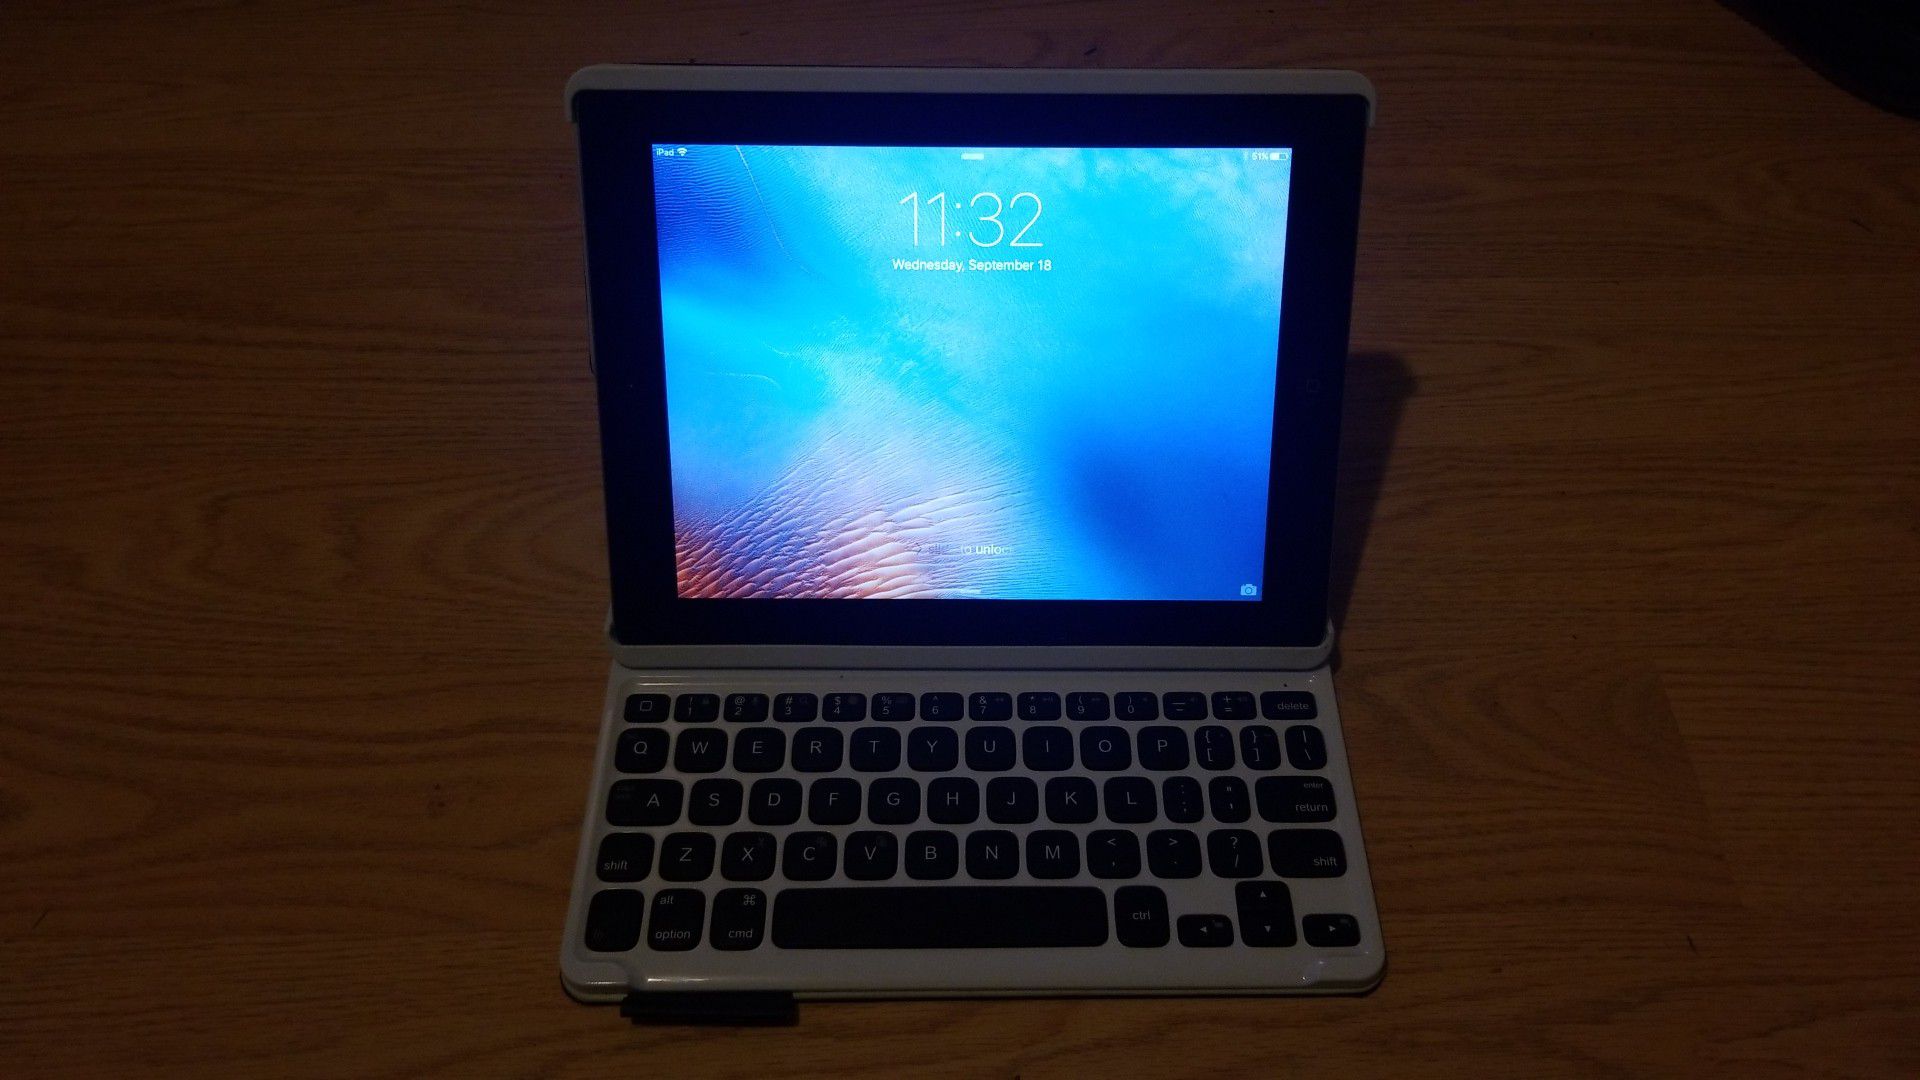 iPad 2 wifi 16, comes with bluetooth keyboard case